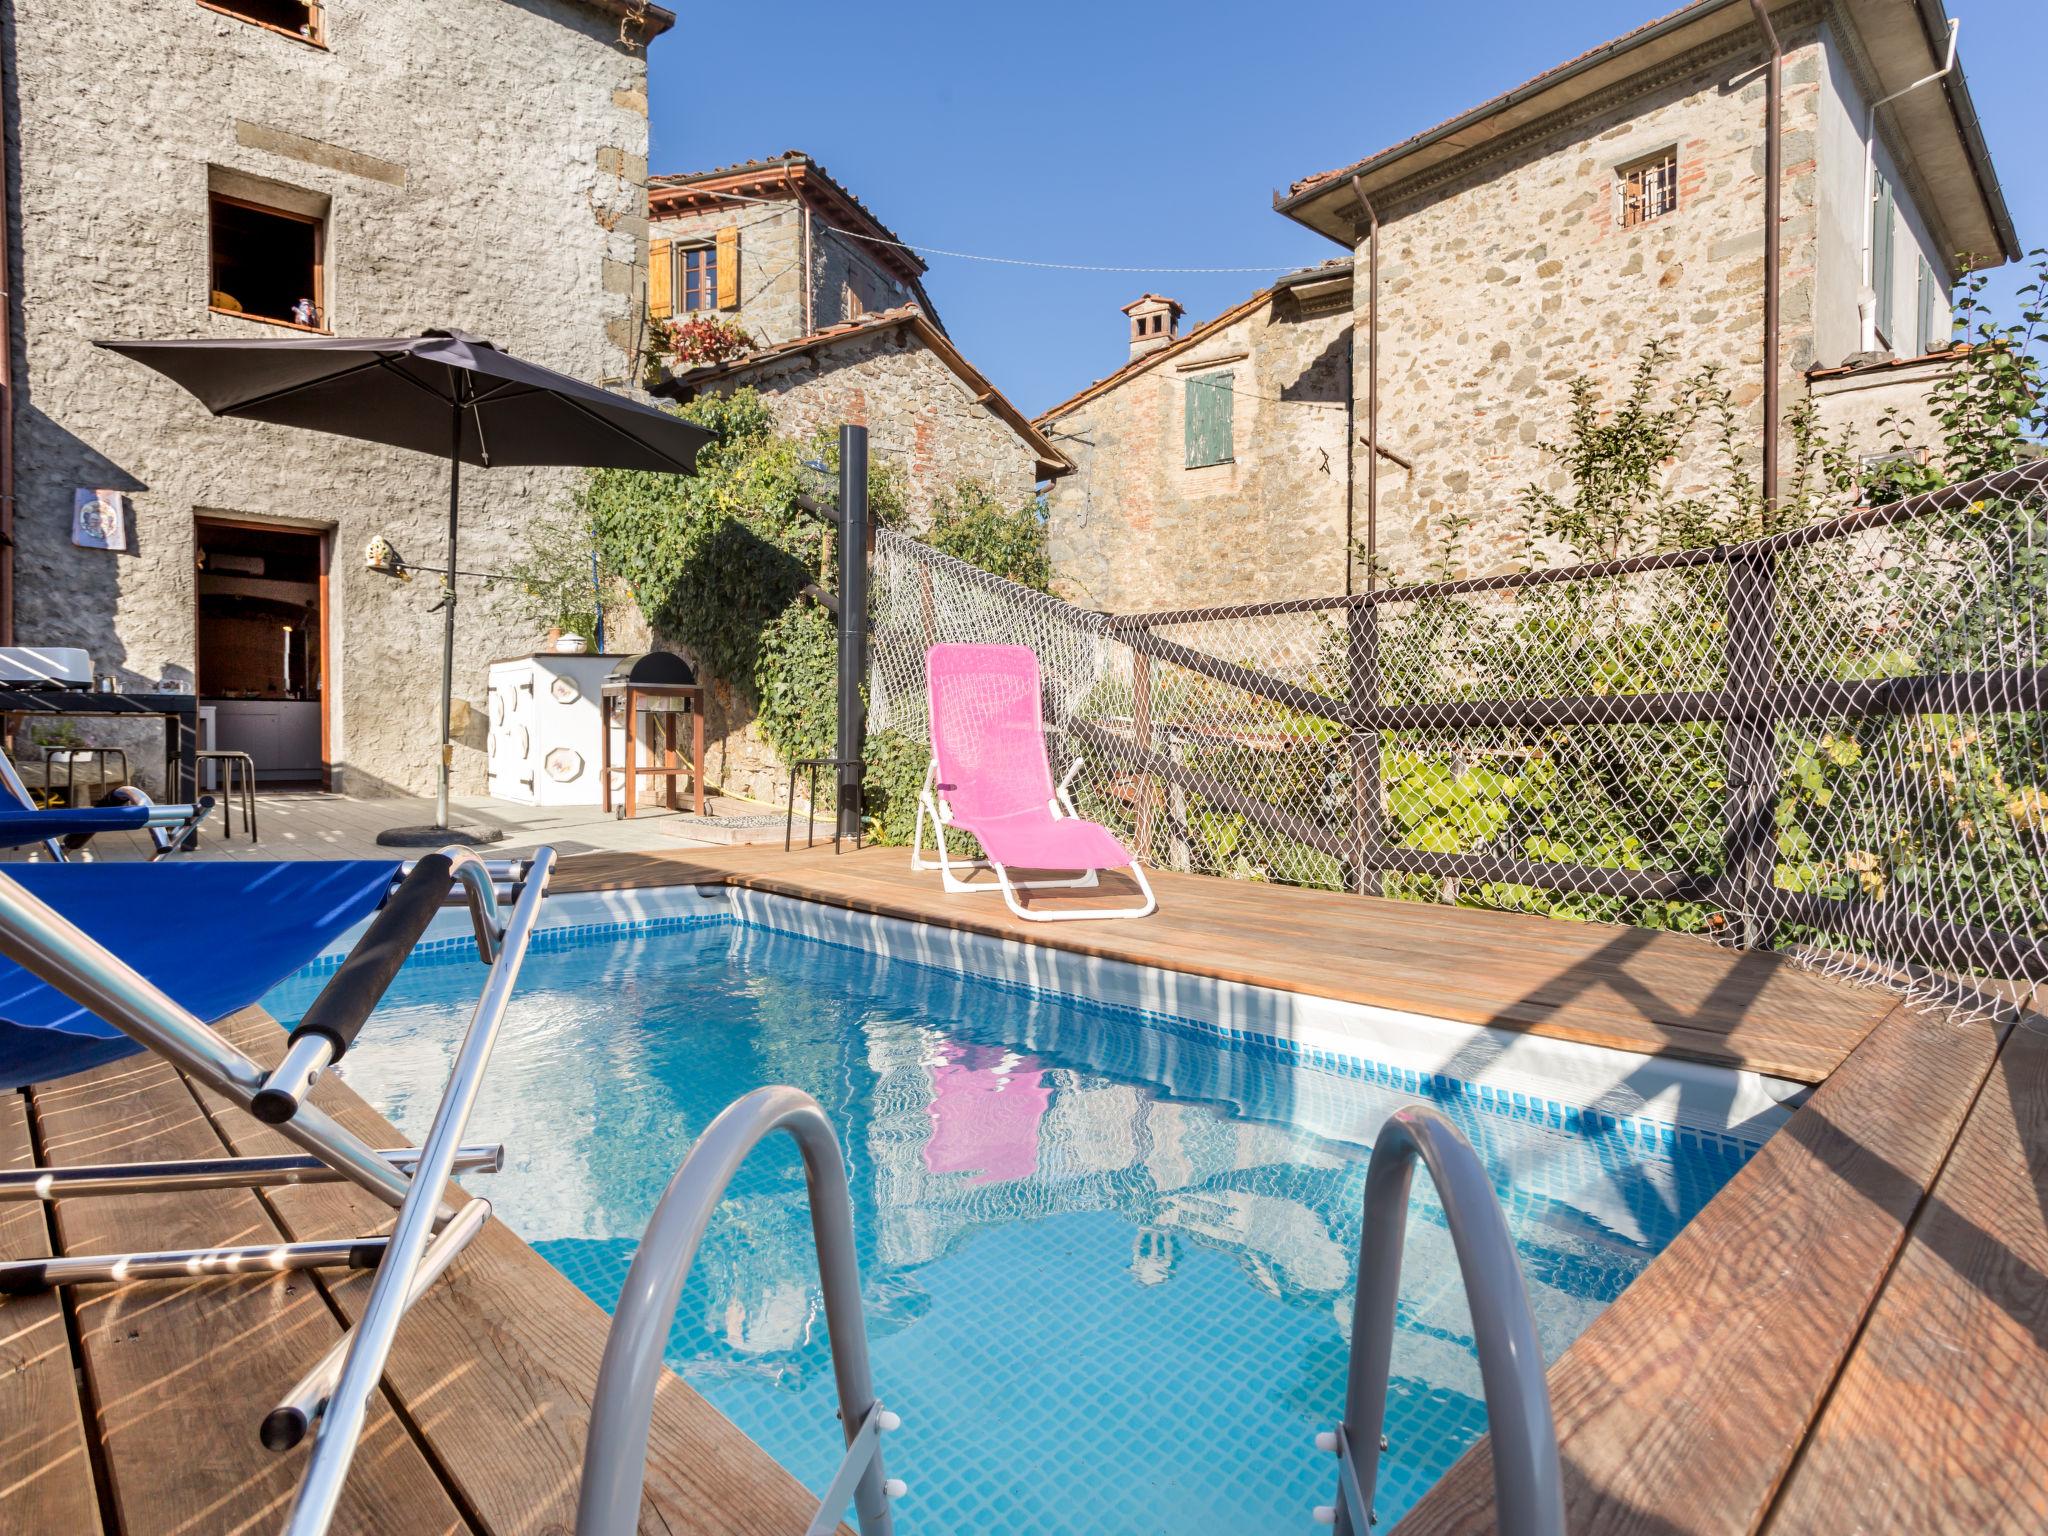 Foto 6 - Haus mit 2 Schlafzimmern in Bagni di Lucca mit privater pool und terrasse